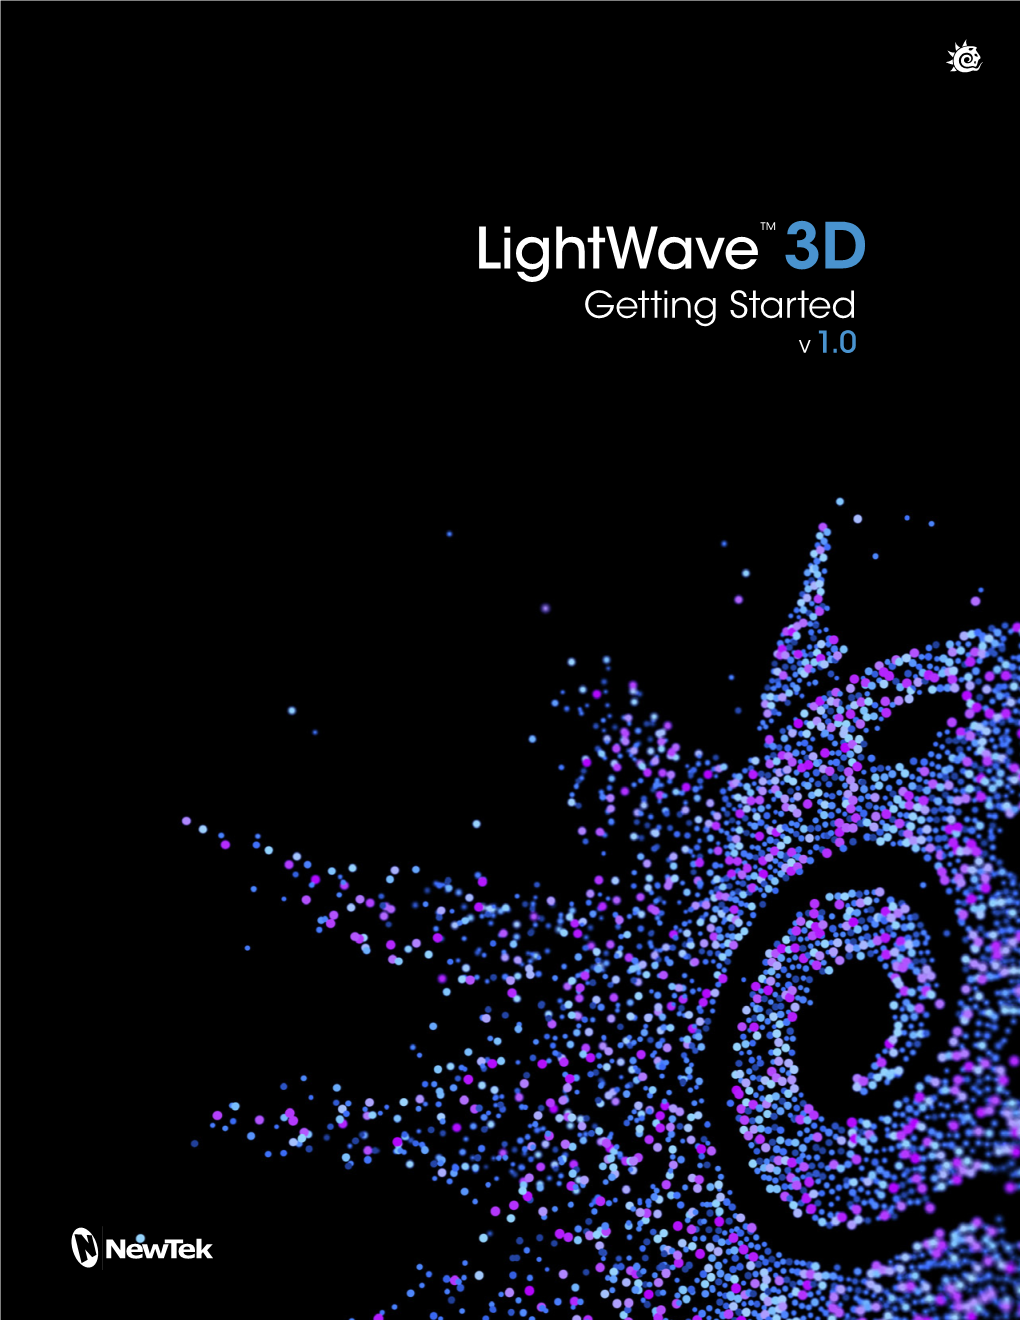 Welcome to Lightwave 3D